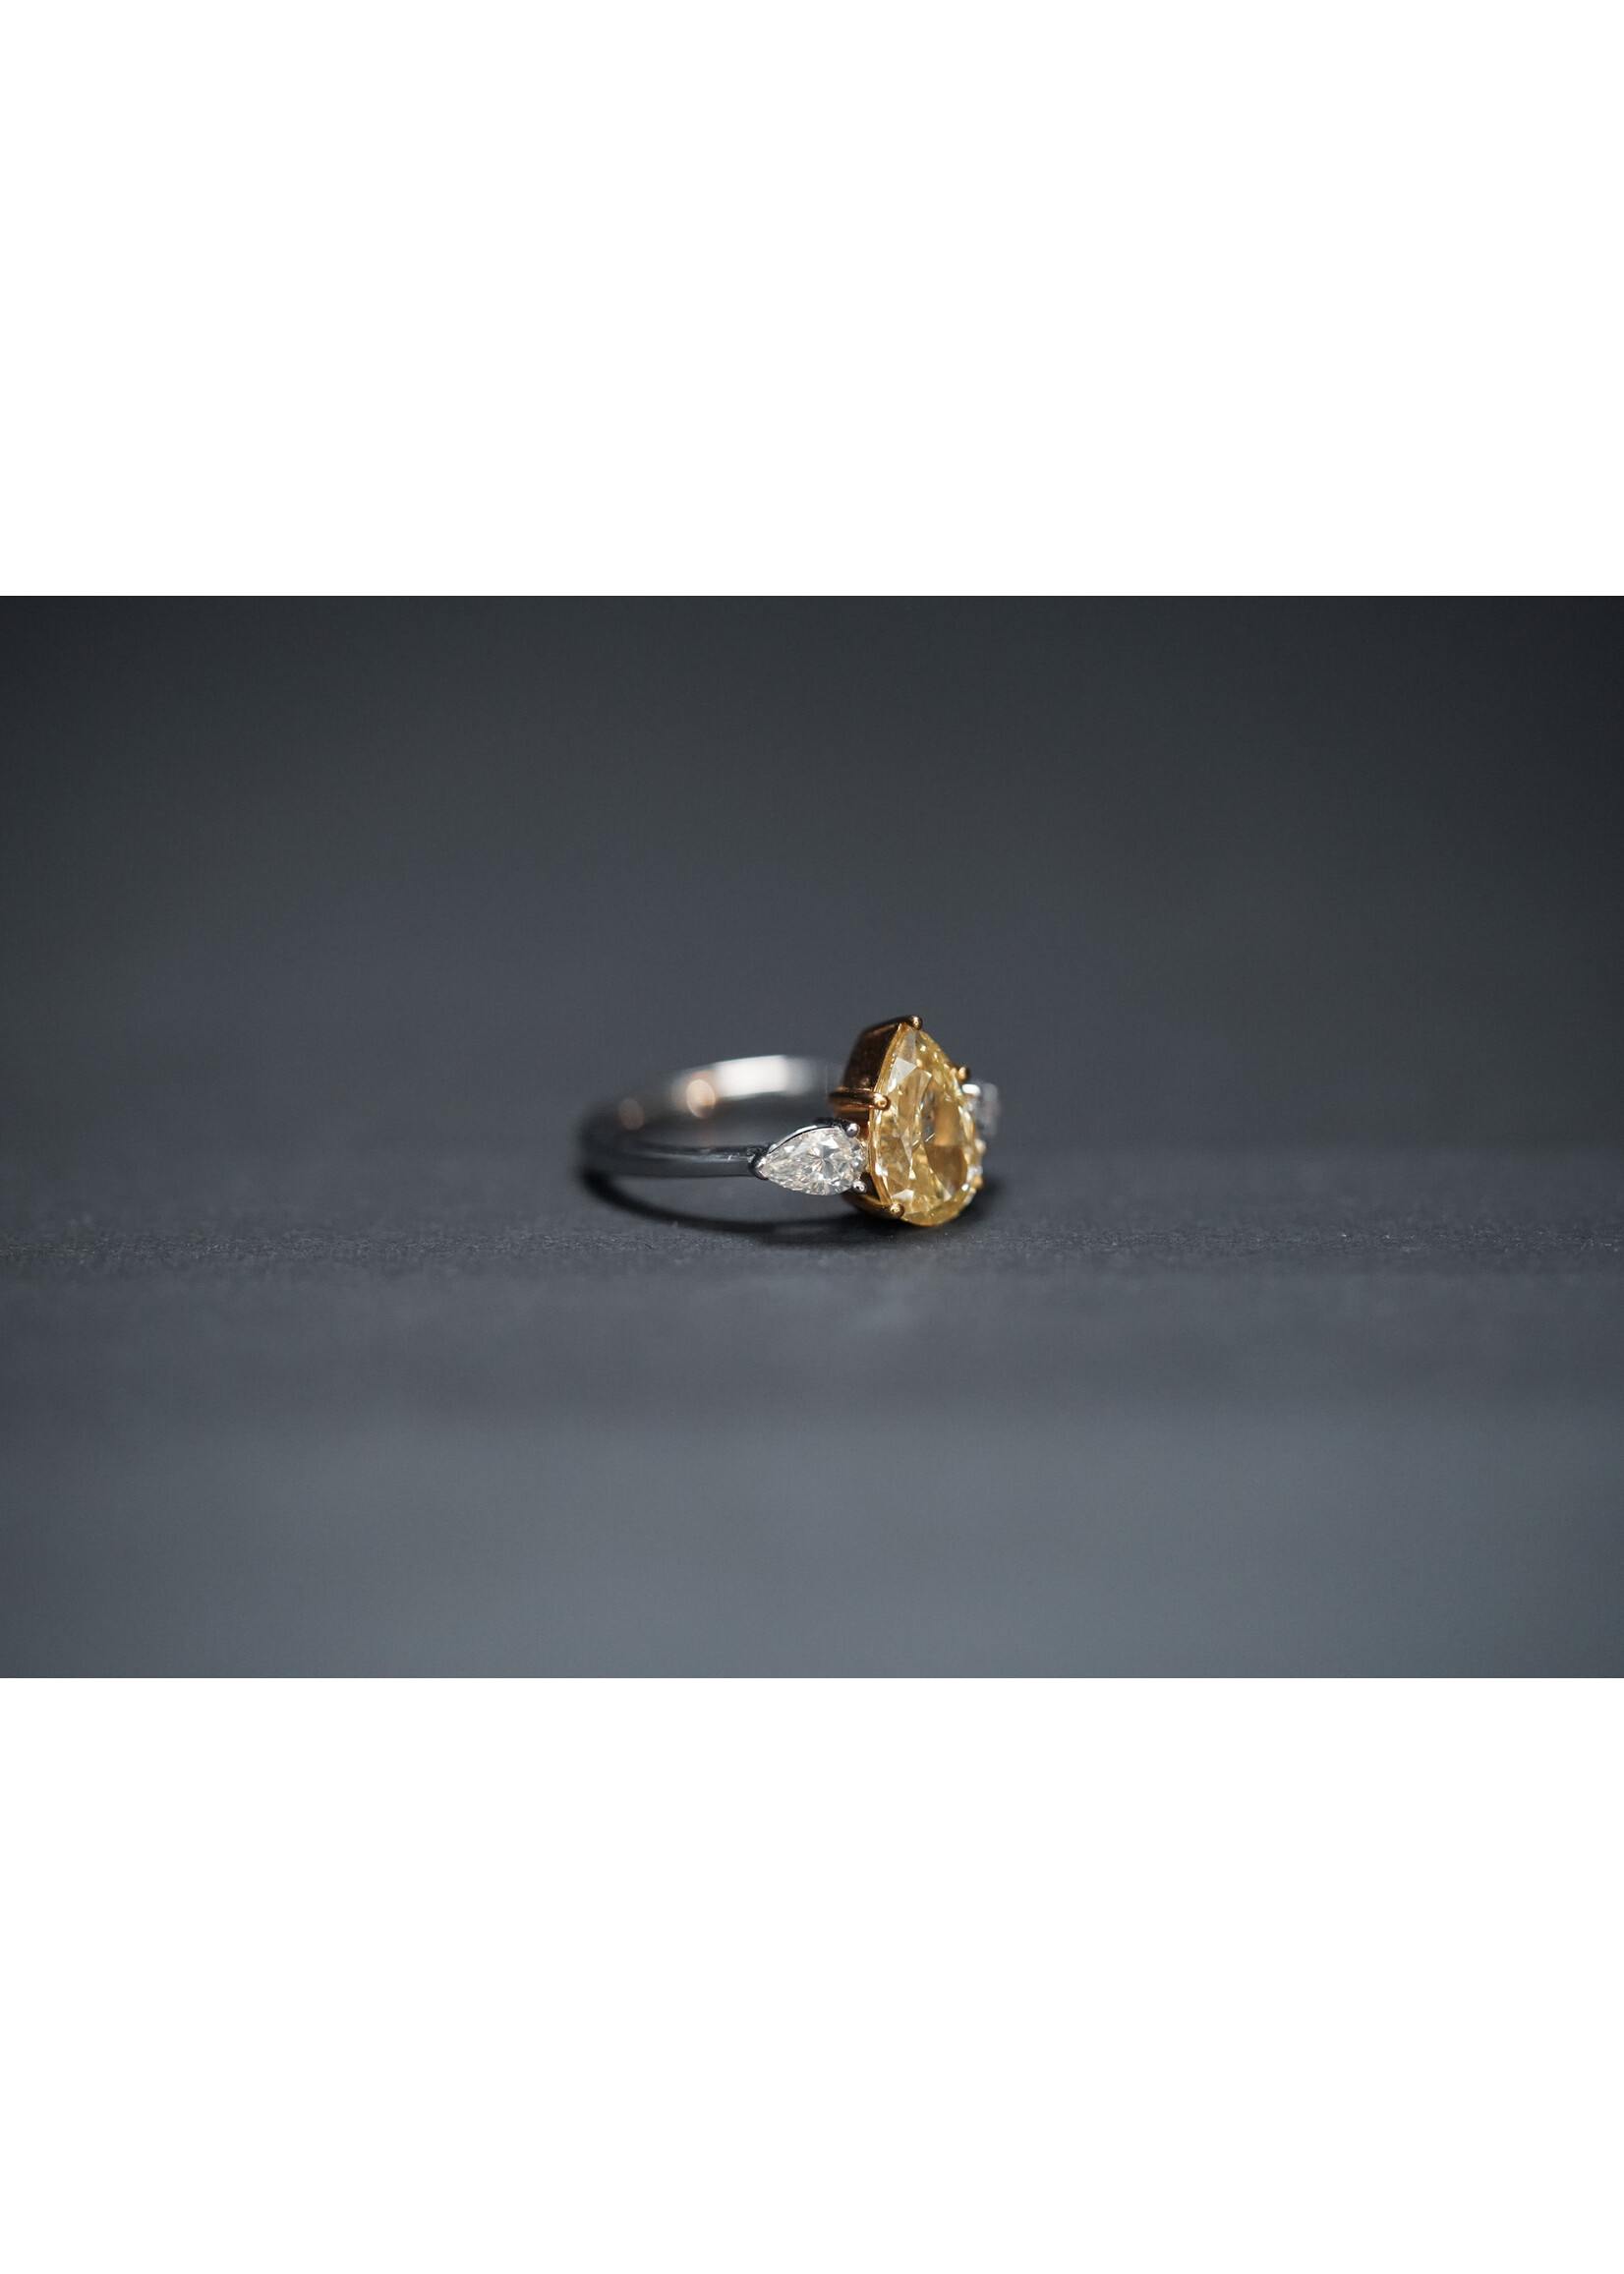 18KWY 4.26g 2.55ctw (2.05ctr) FY/SI2 GIA Pear Diamond Three-Stone Ring (size 6)